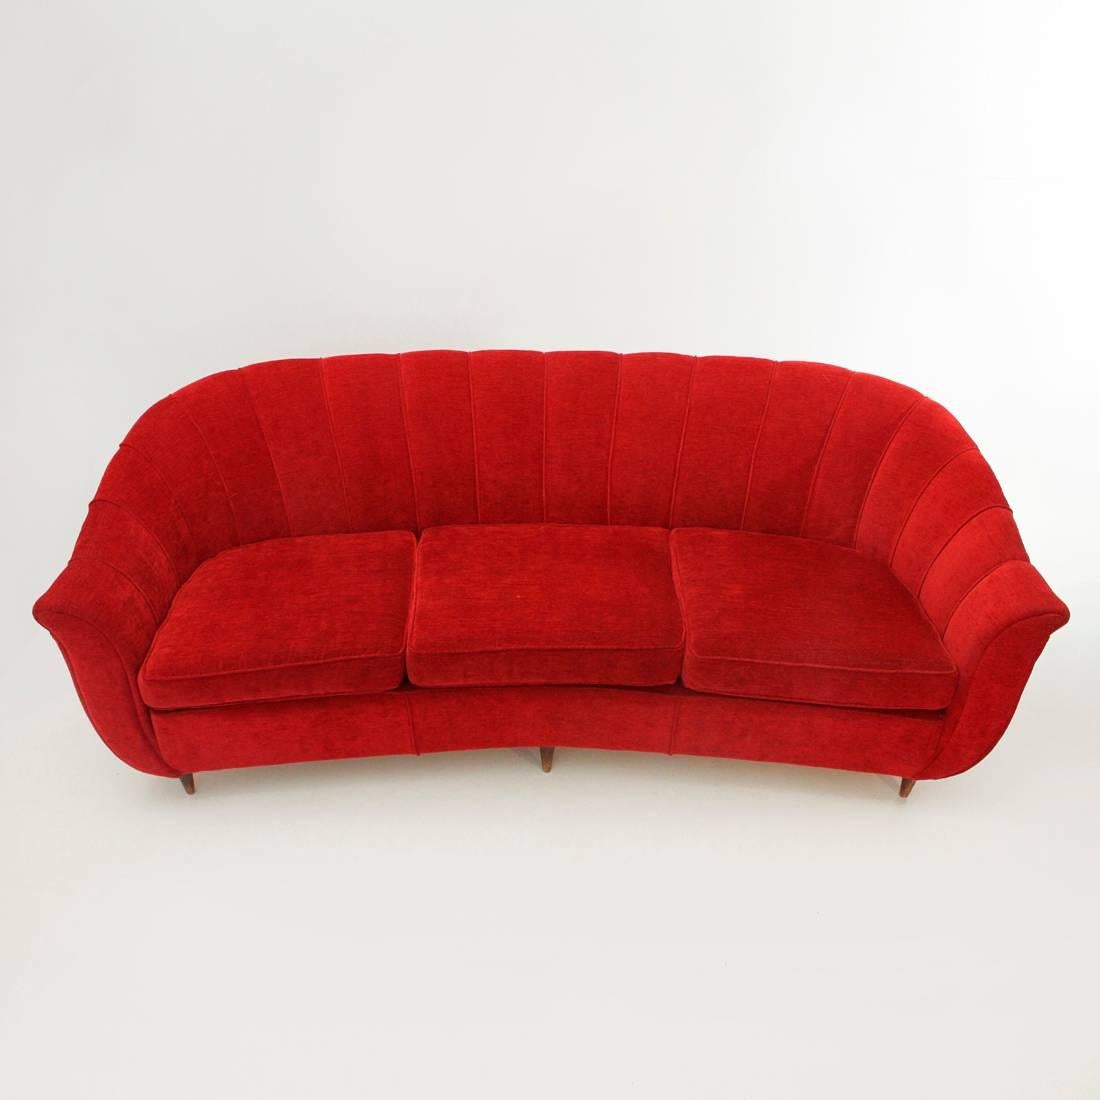 Mid-Century Modern Italian Three-Seat Red Sofa, 1950s